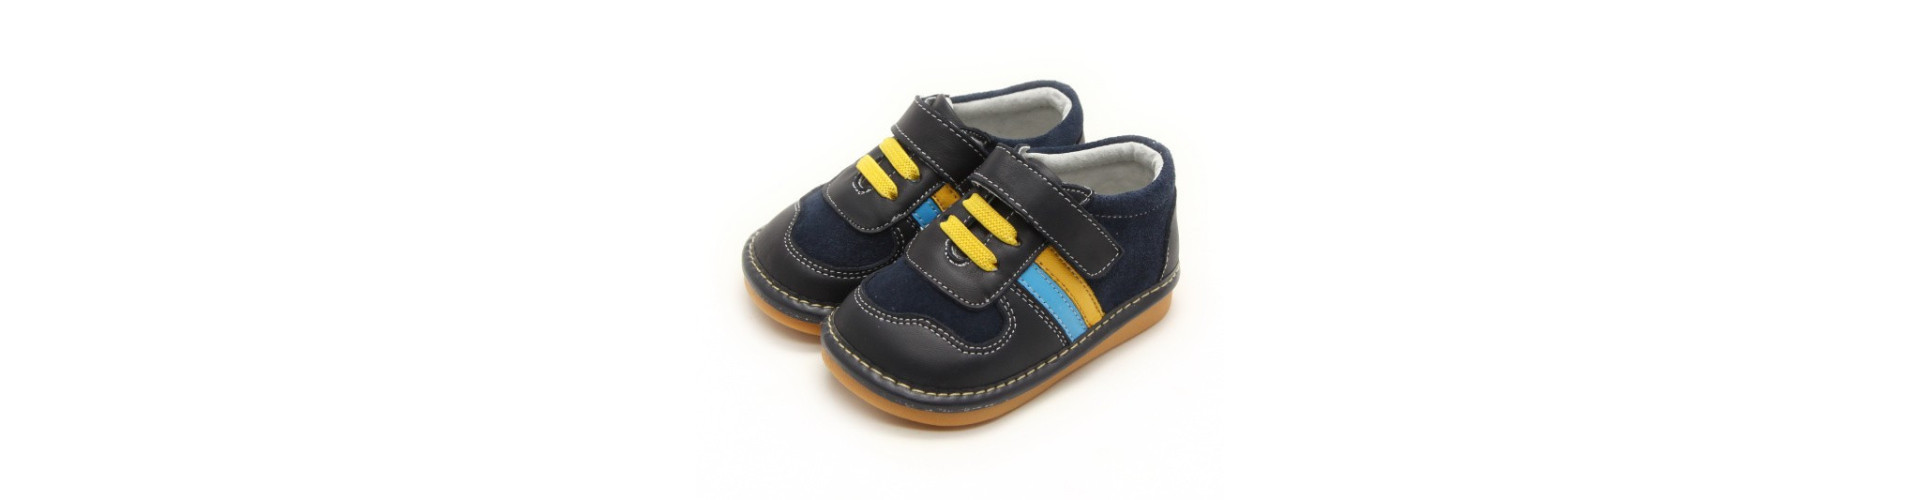 Freycoo - detská obuv, topánky pre deti